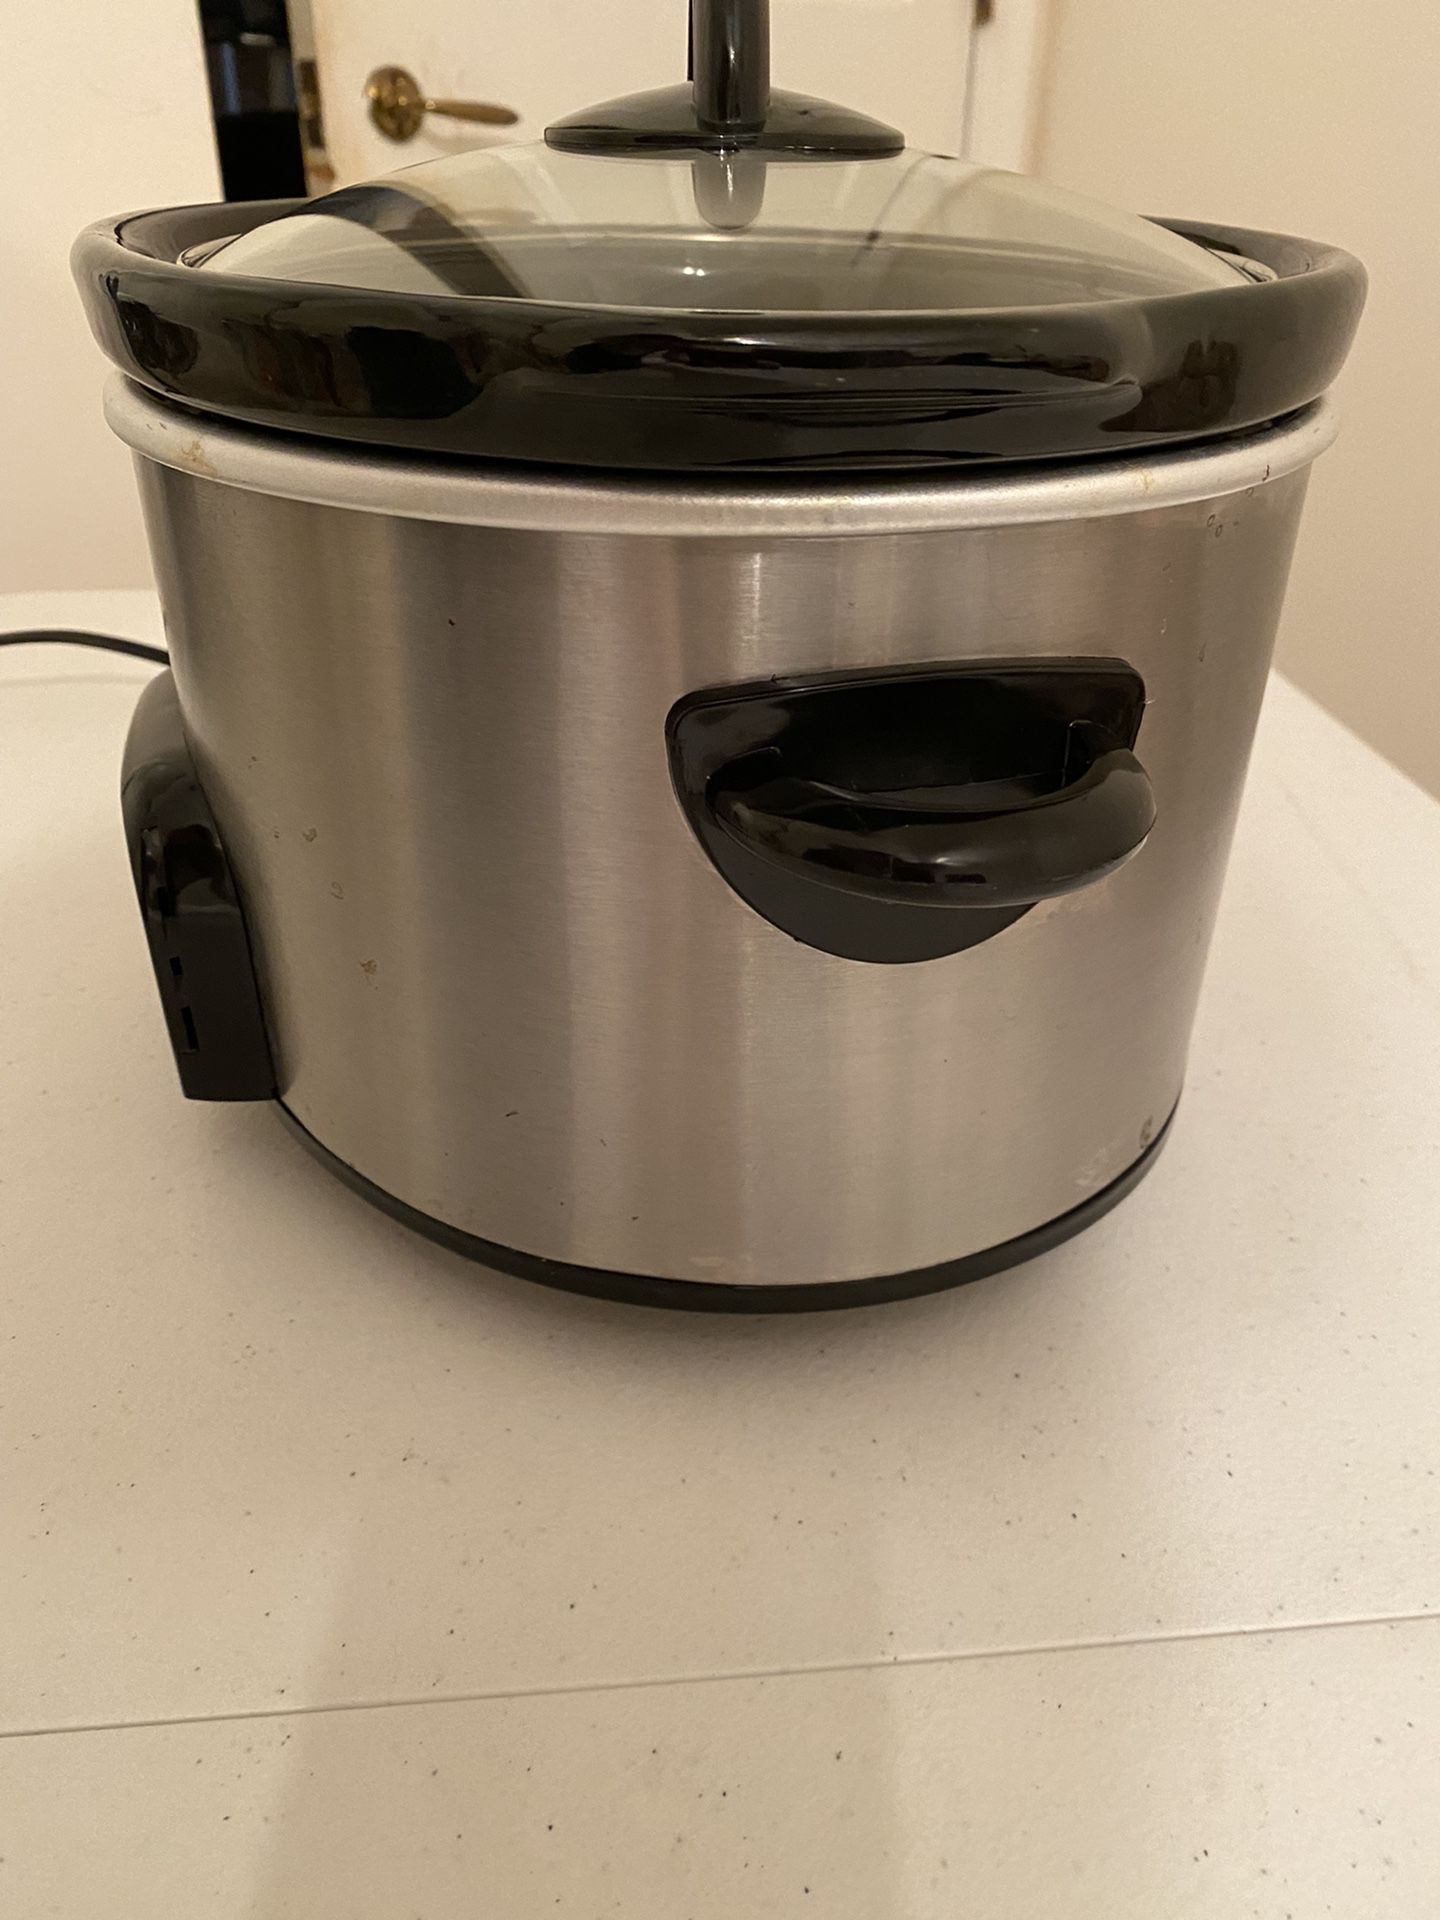 Crock-pot Oval Manual Slow Cooker, 8 quart, Stainless Steel (SCV800-S) for  Sale in Suwanee, GA - OfferUp